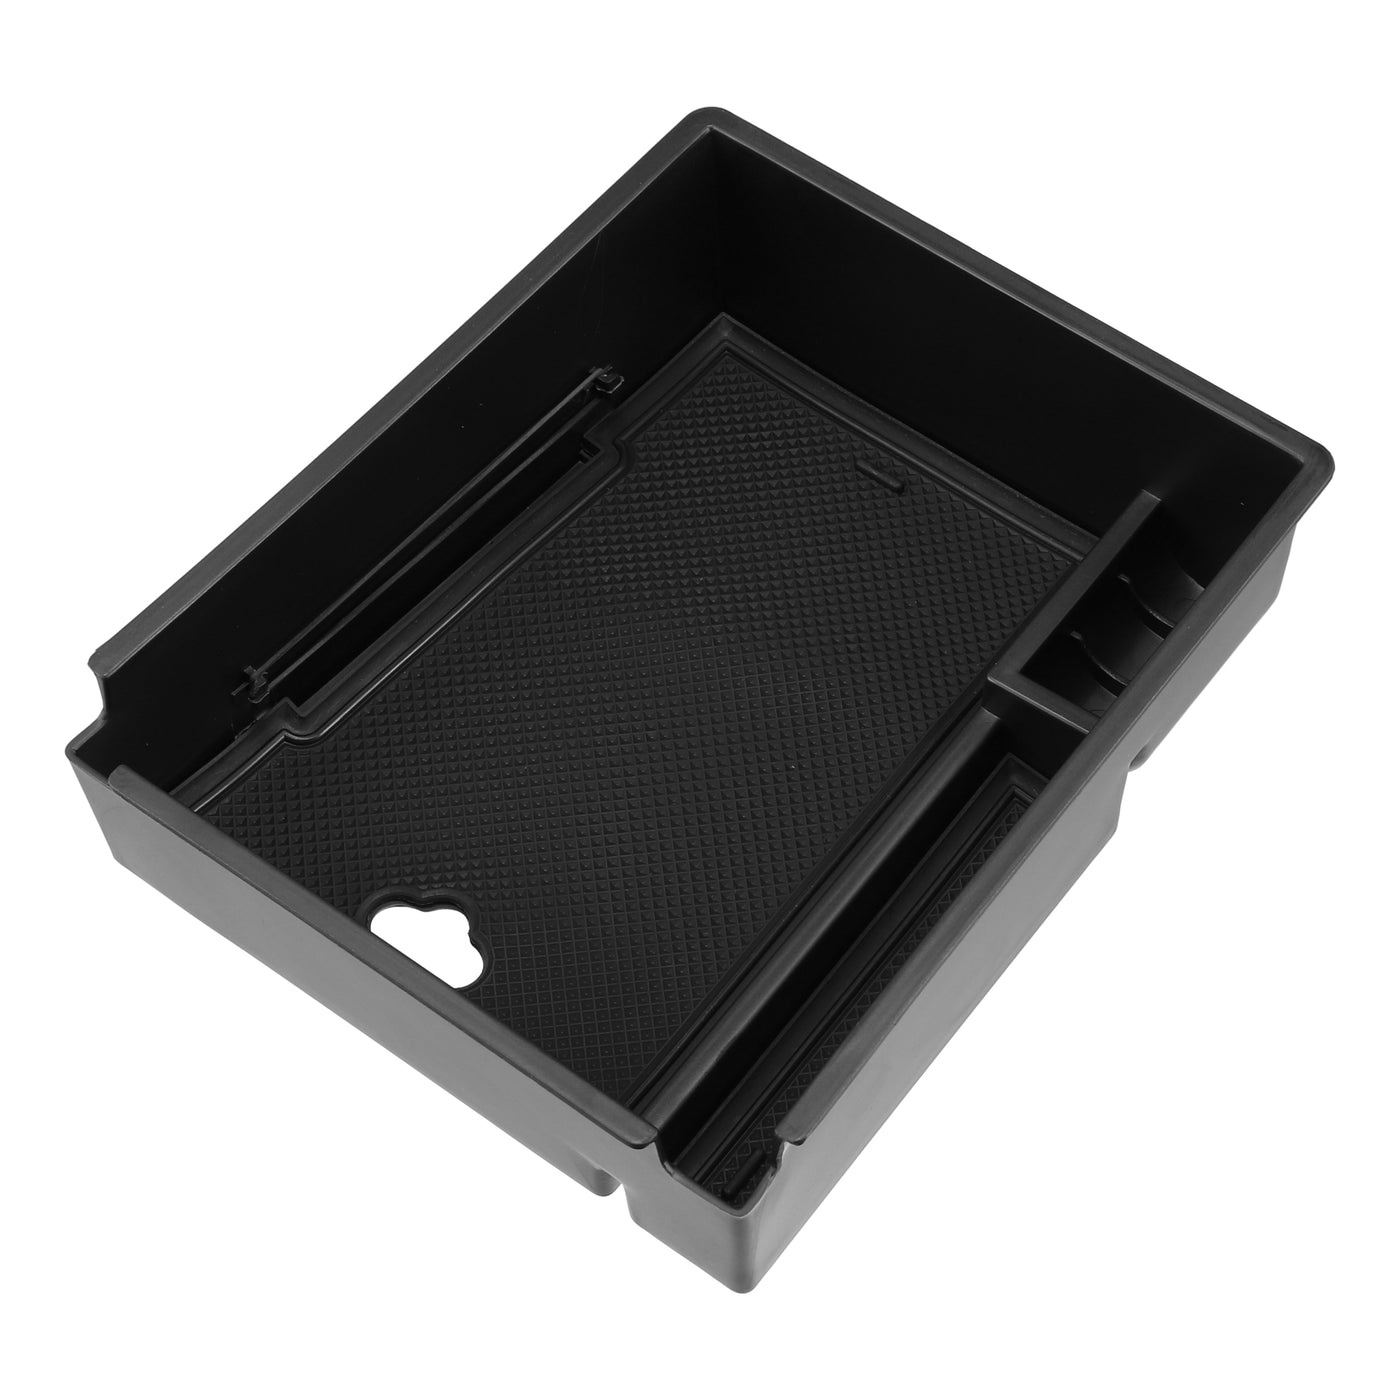 X AUTOHAUX Car Auto Center Console Organizer Tray Storage Box Accessories for Hyundai Tucson NX4 2021-2022 Interior Armrest Box Insert Tray Container Black